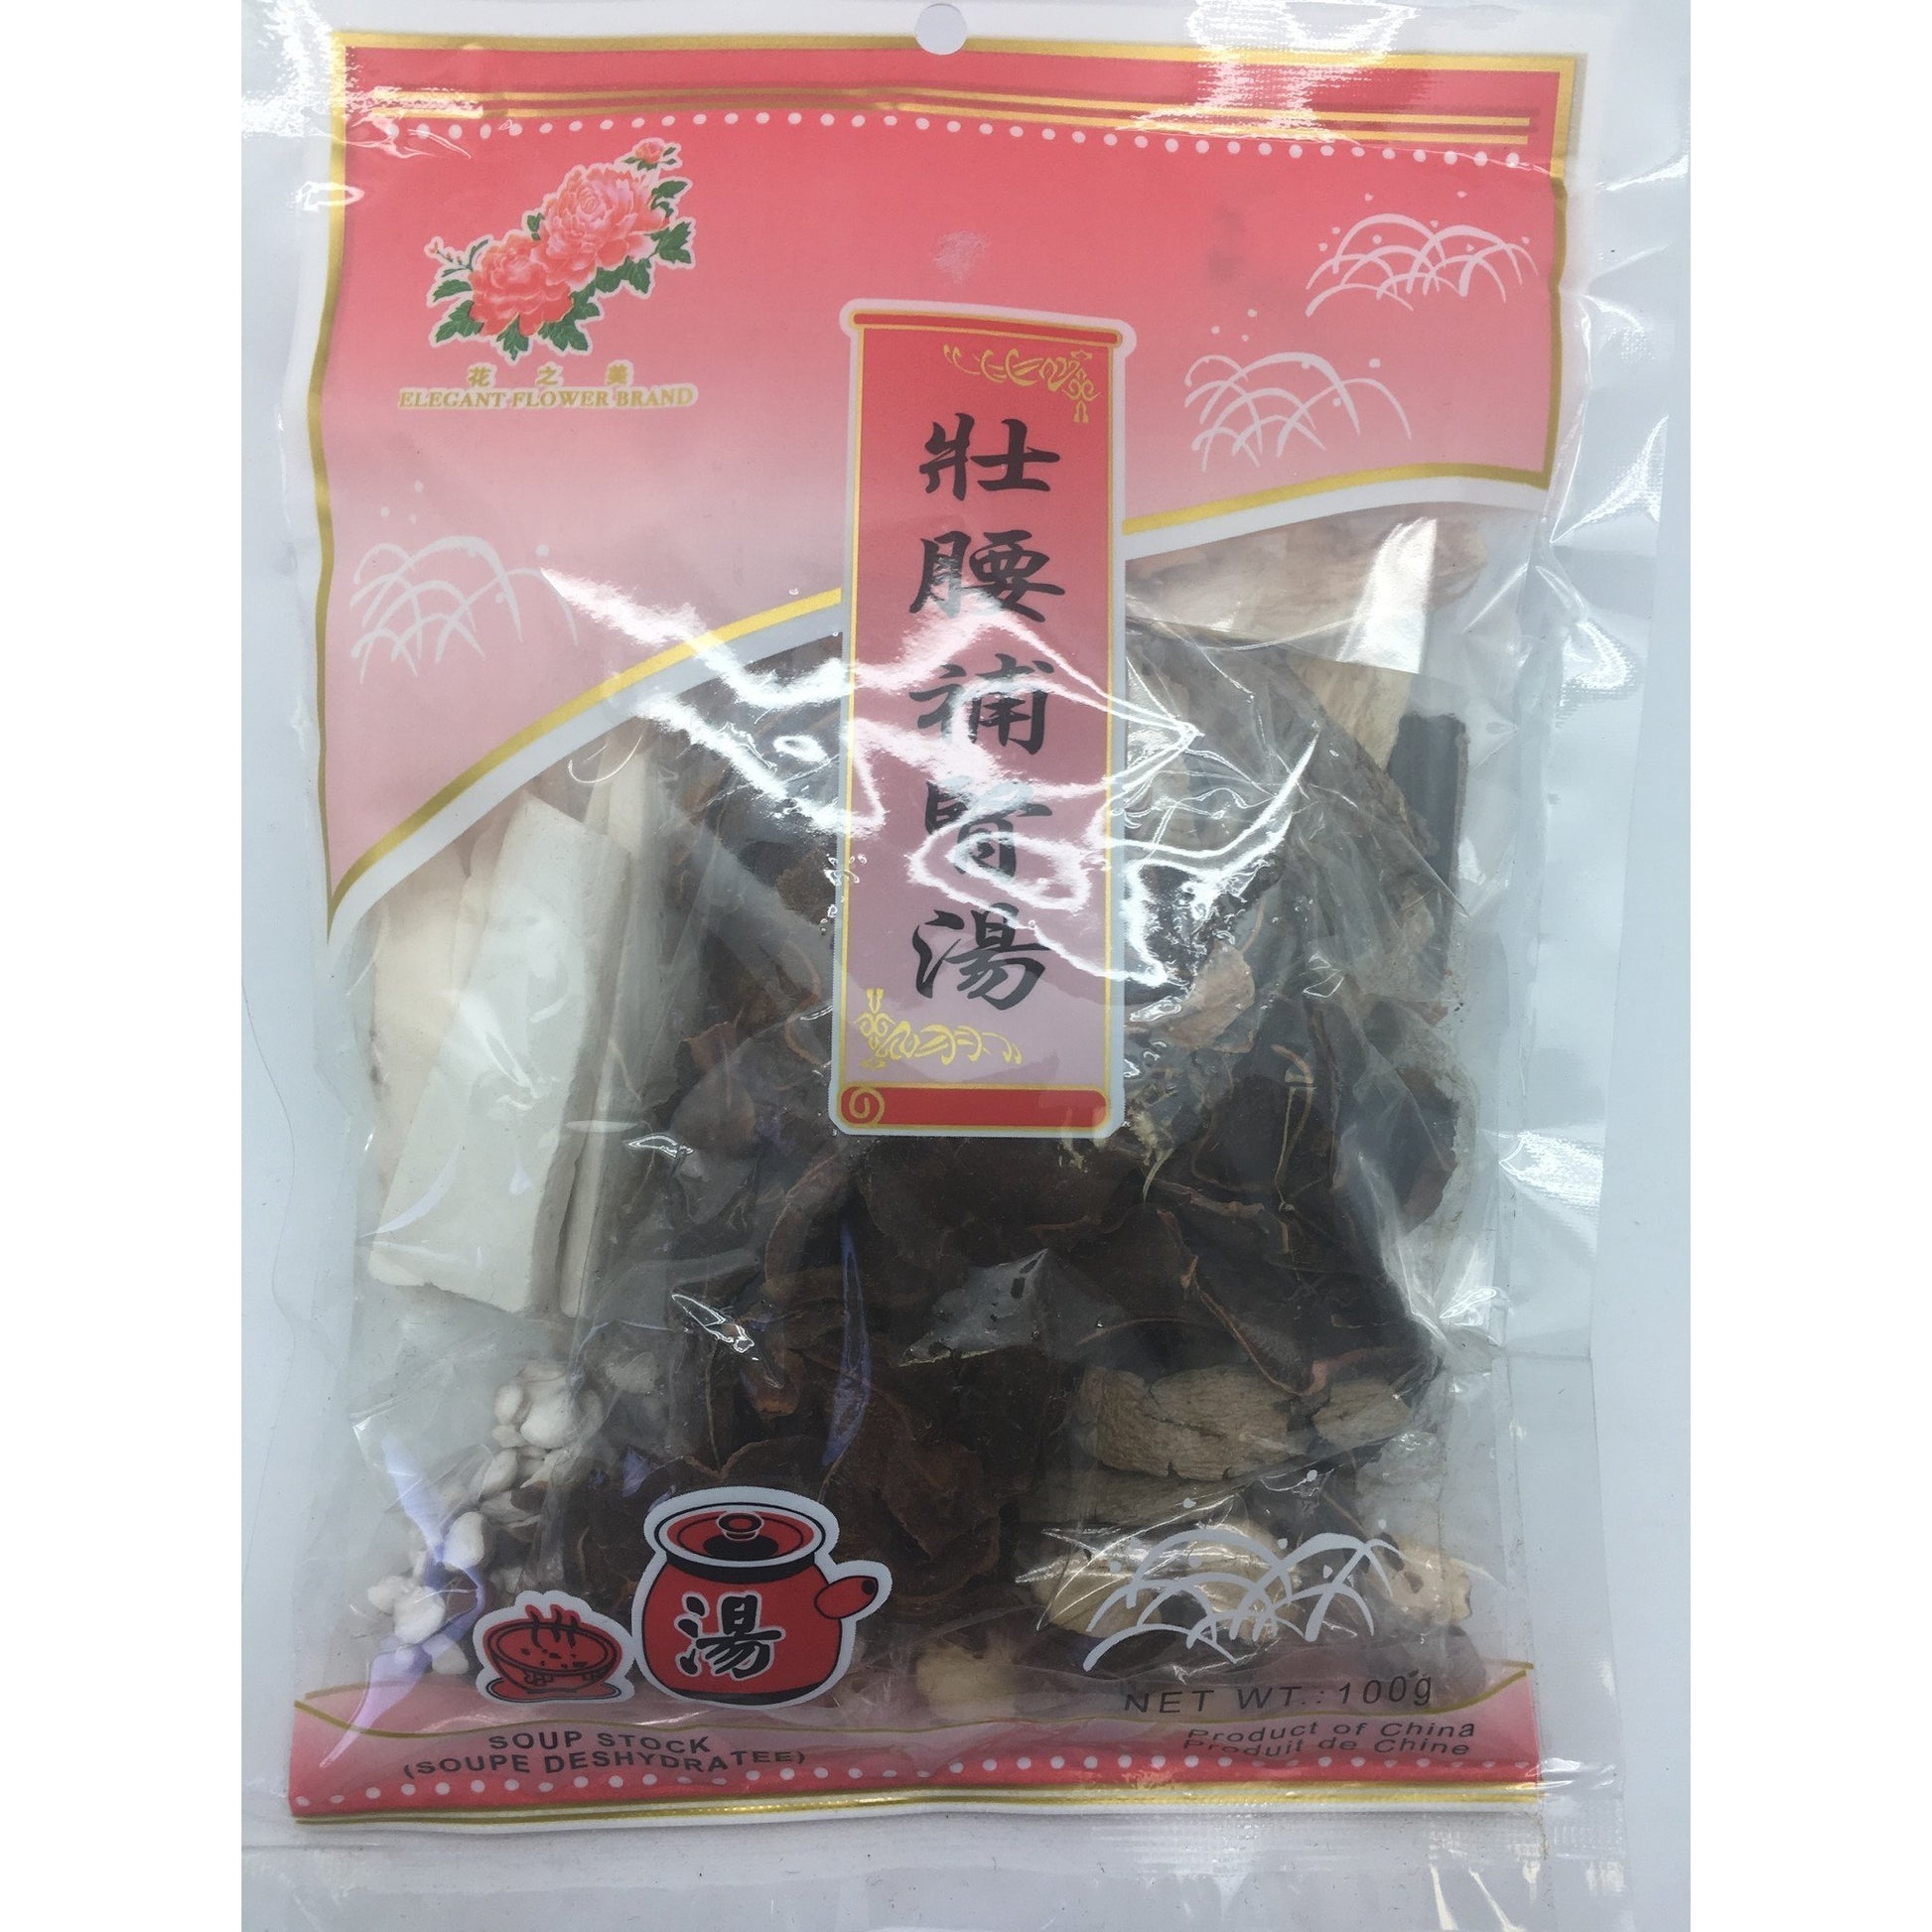 D116K Elegant Flower Brand - soup mix 100g - 100 bags / 1 CTN - New Eastland Pty Ltd - Asian food wholesalers